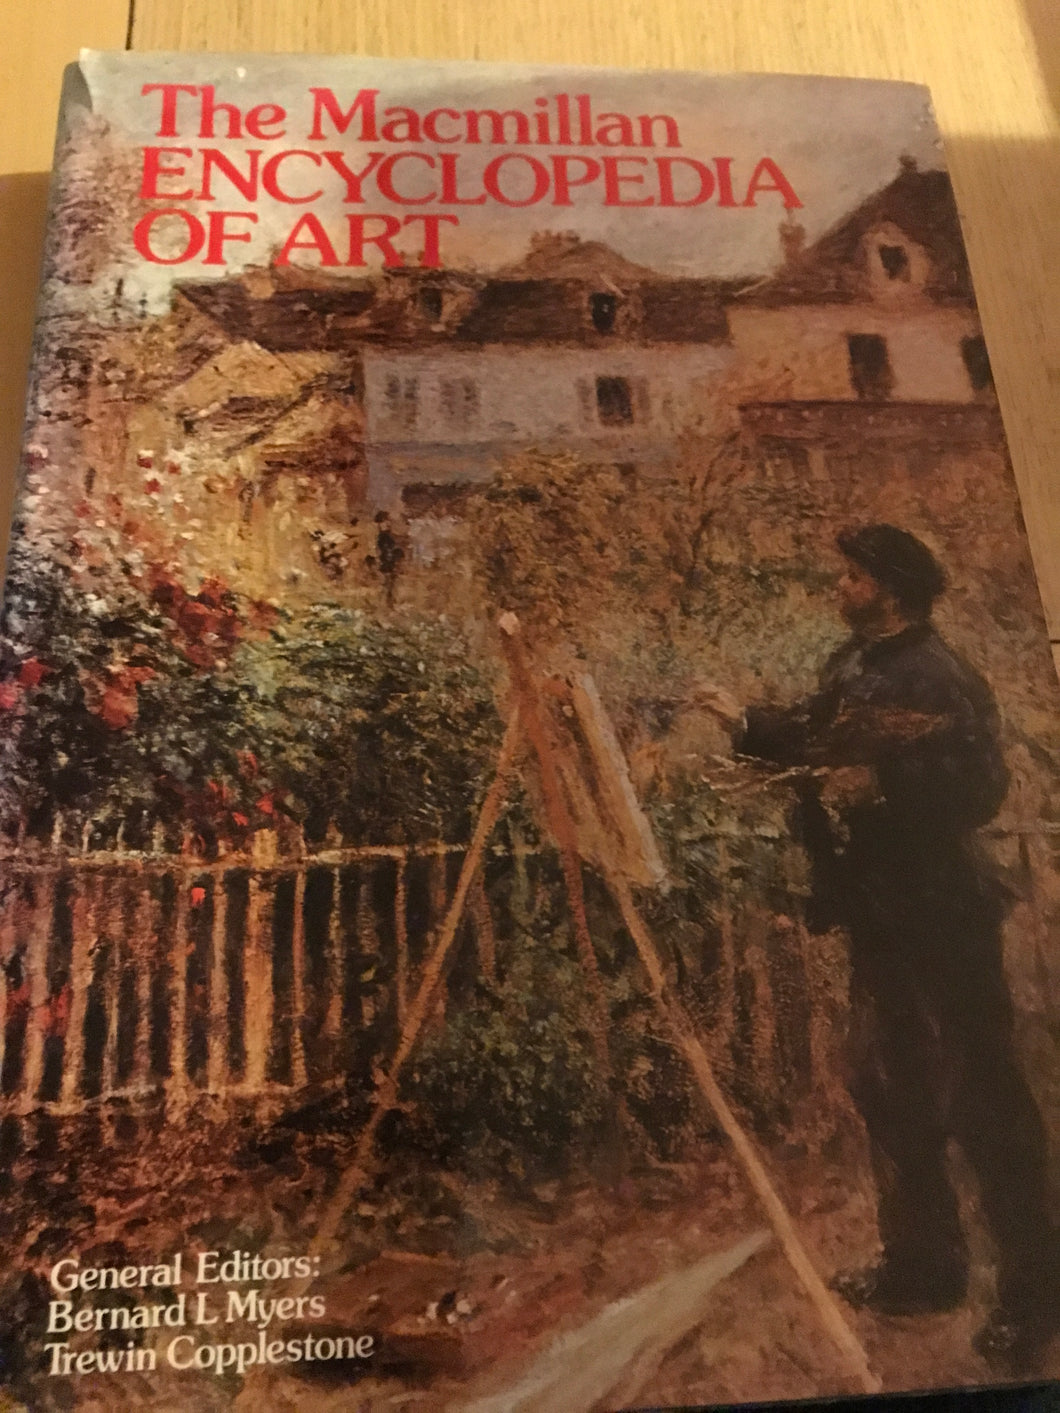 Hardcover book. The Macmillan Encyclopedia of art